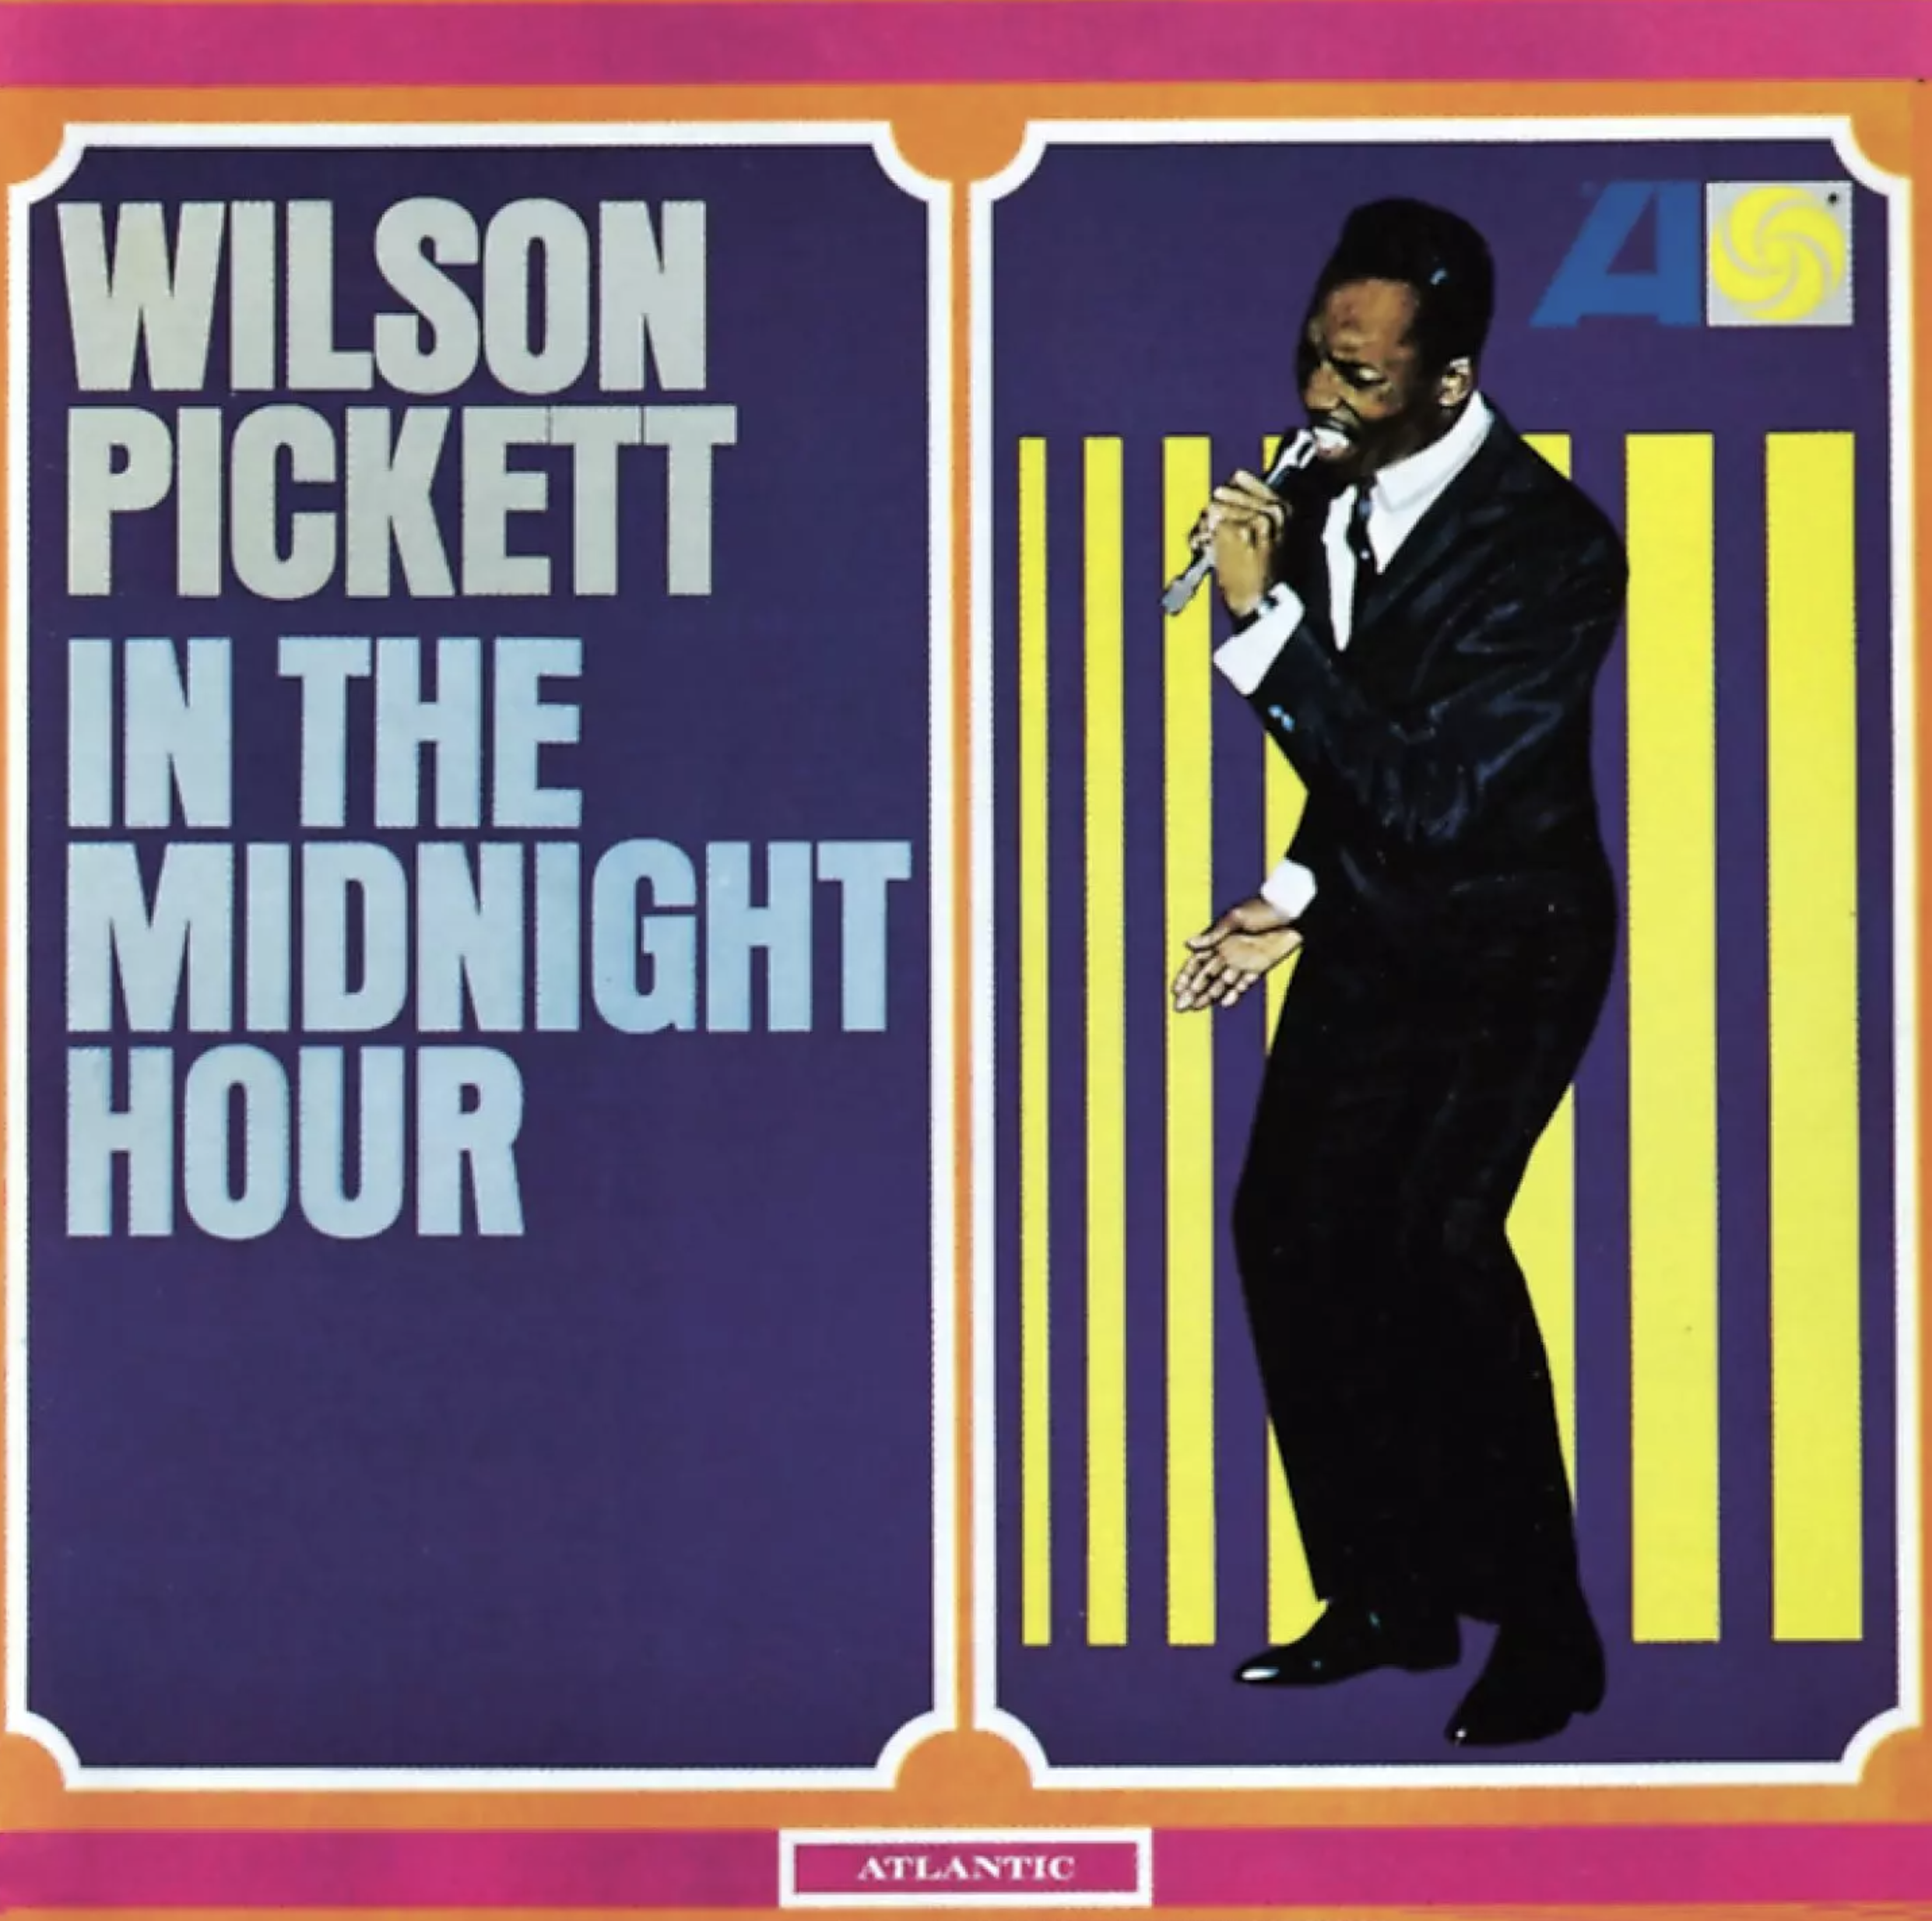 Wilson Pickett's "In the Midnight Hour"